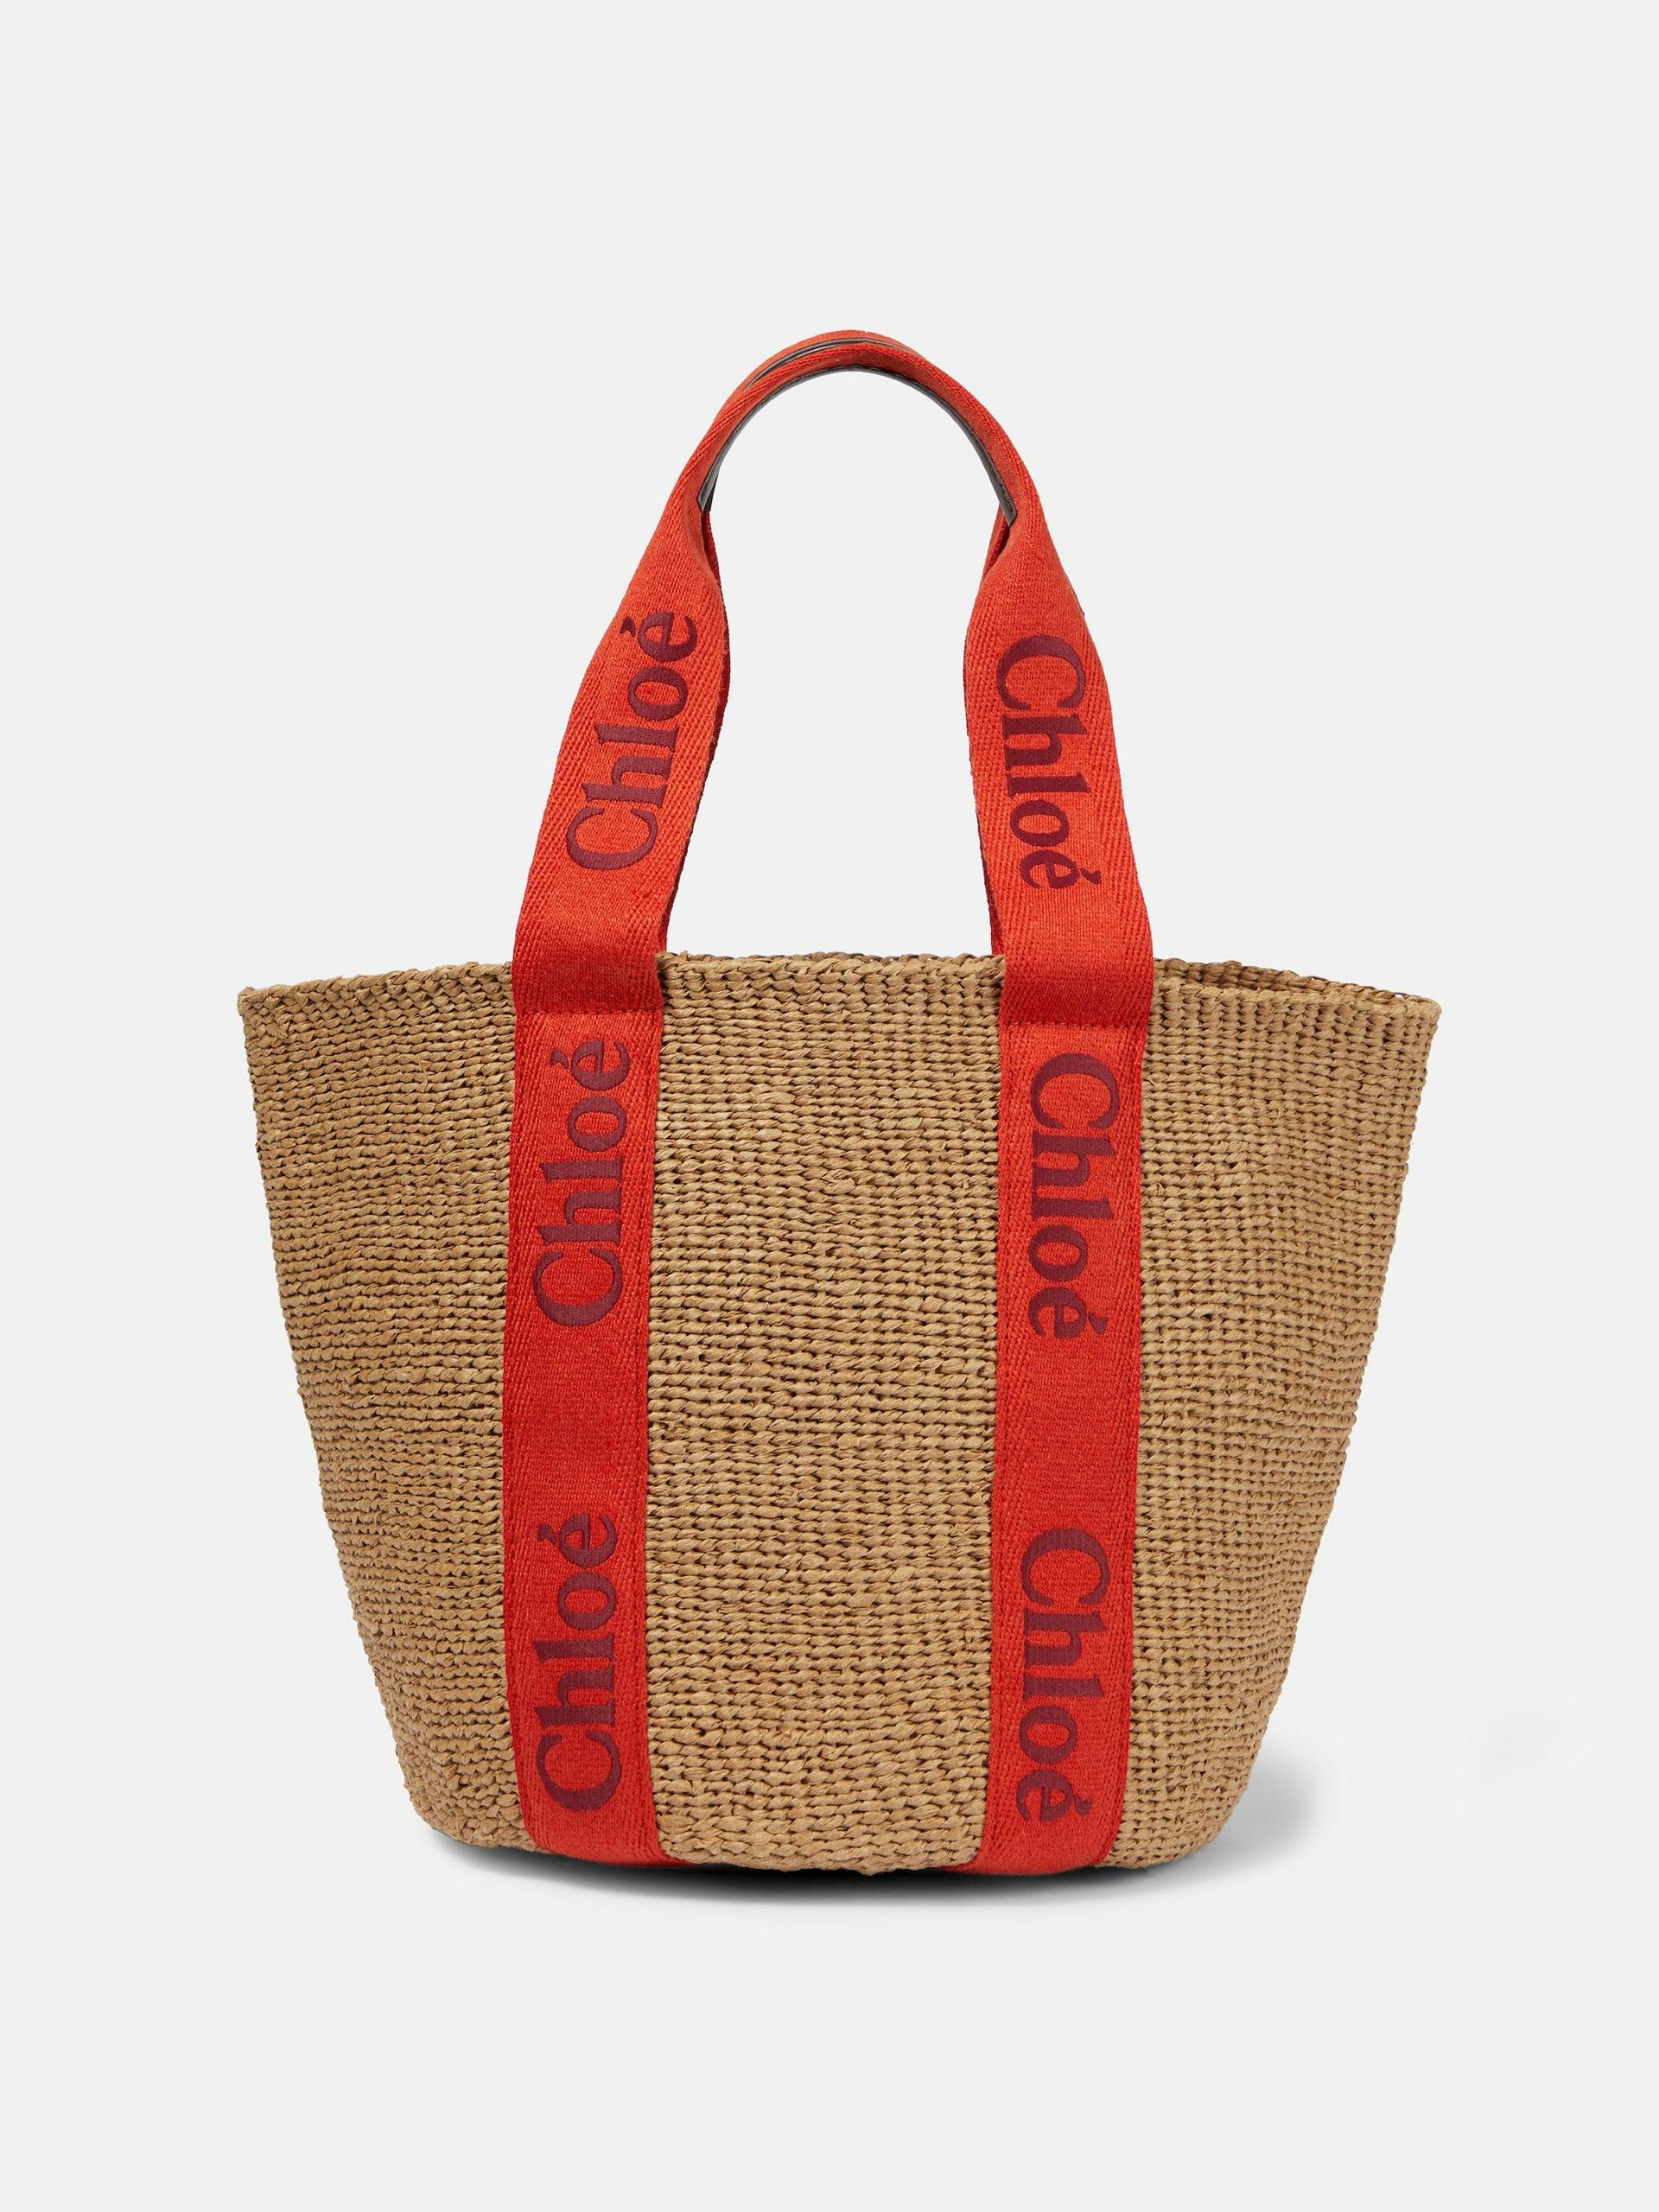 Raffia basket bag with red logo canvas straps